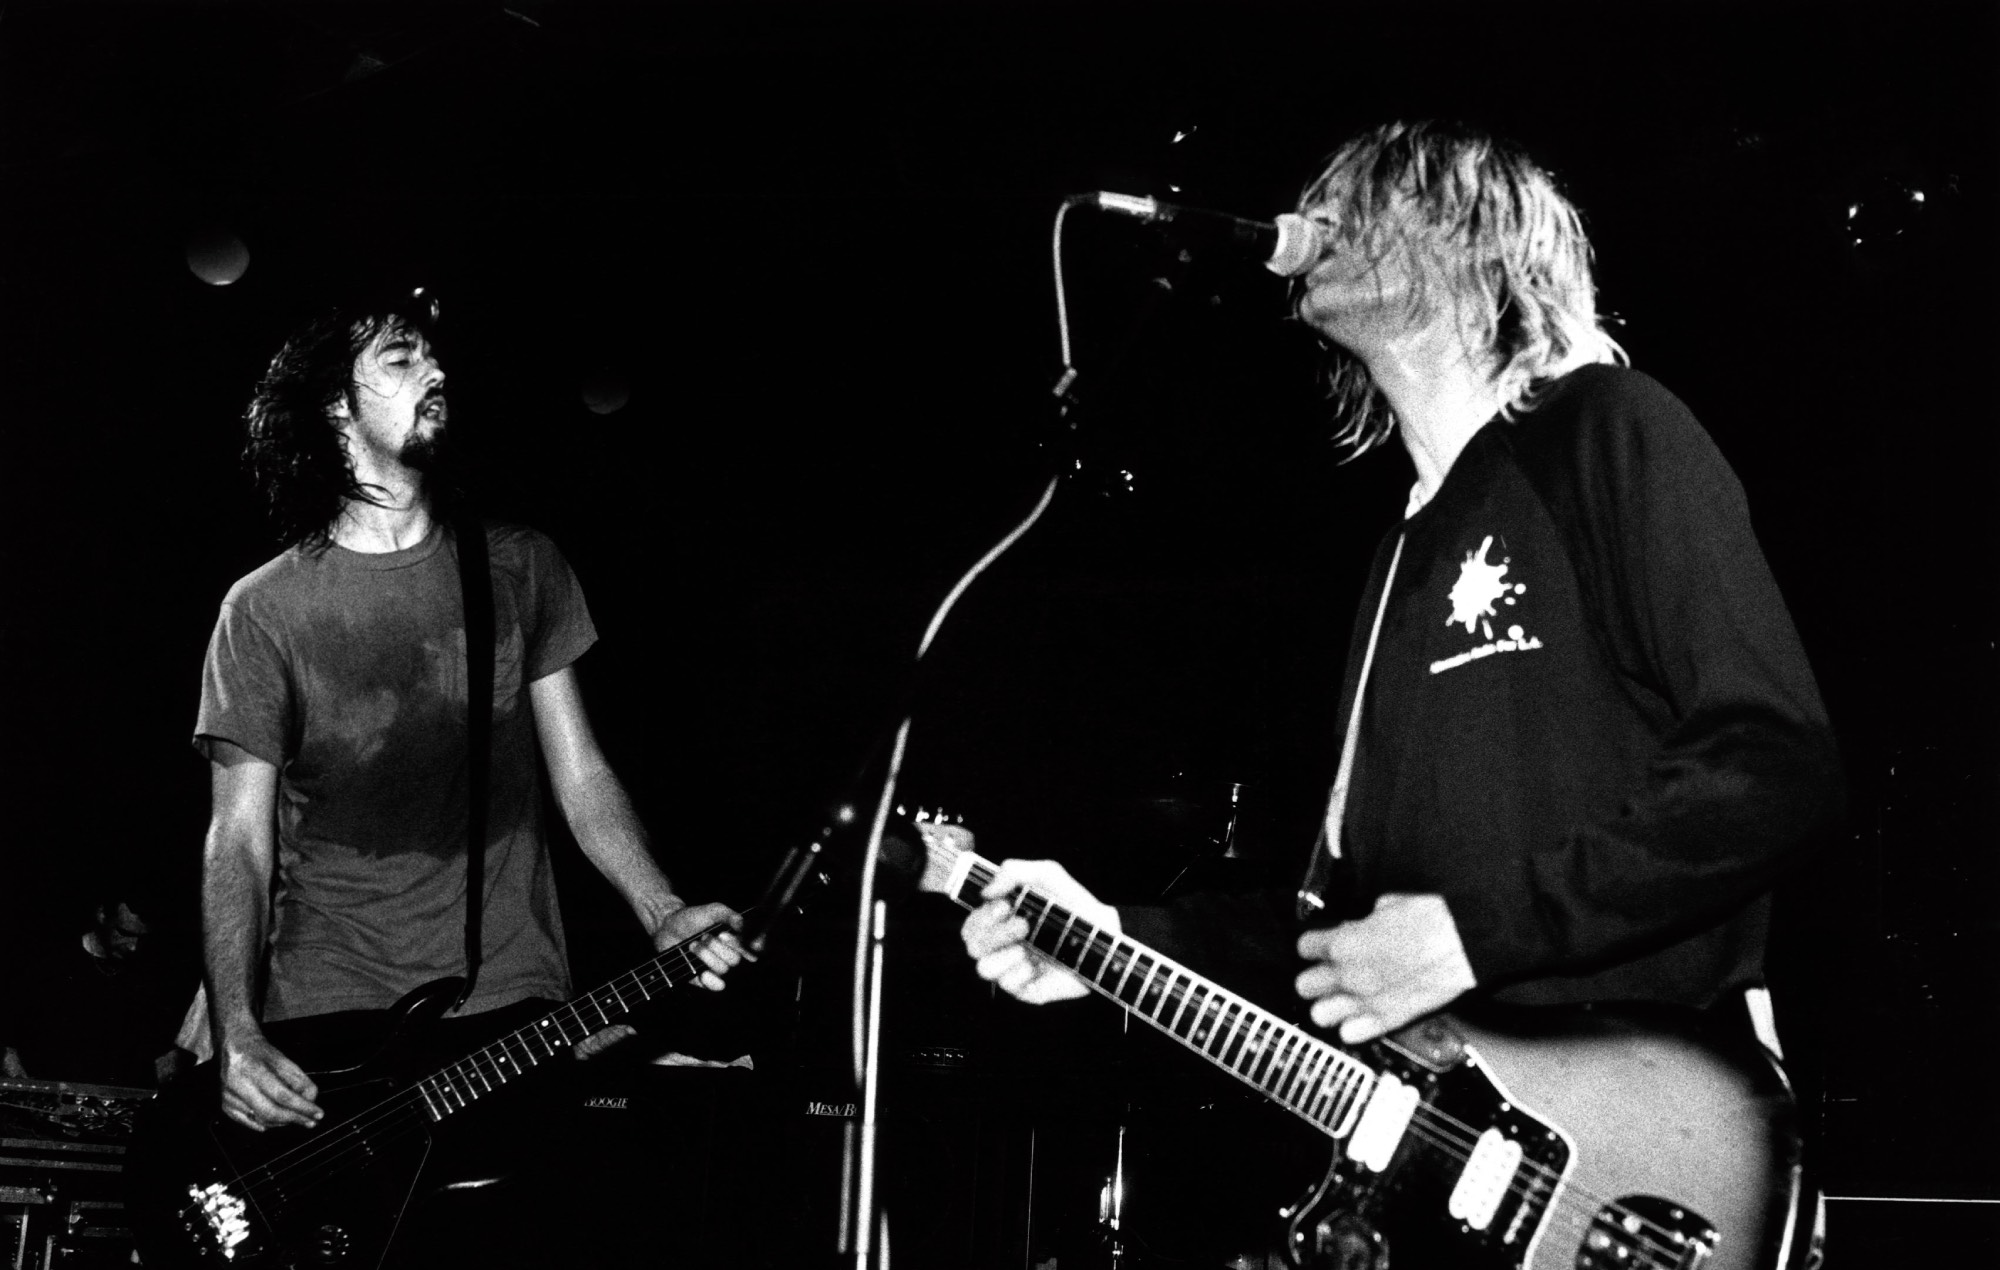 Krist Novoselic and Kurt Cobain